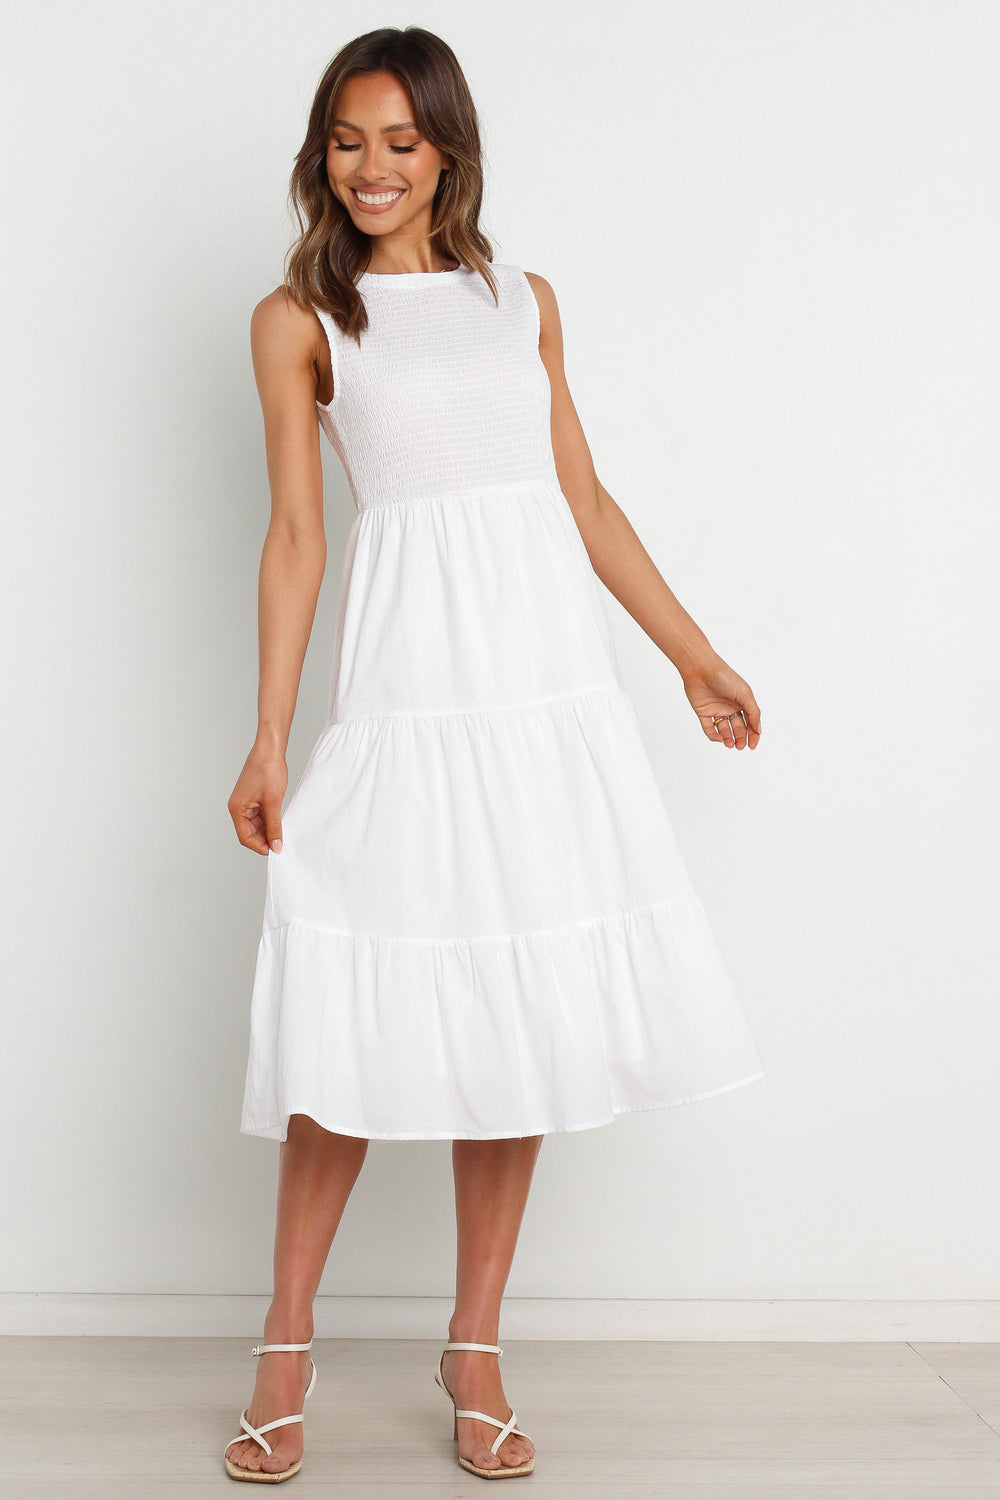 Erhardt Dress - White - Petal & Pup USA